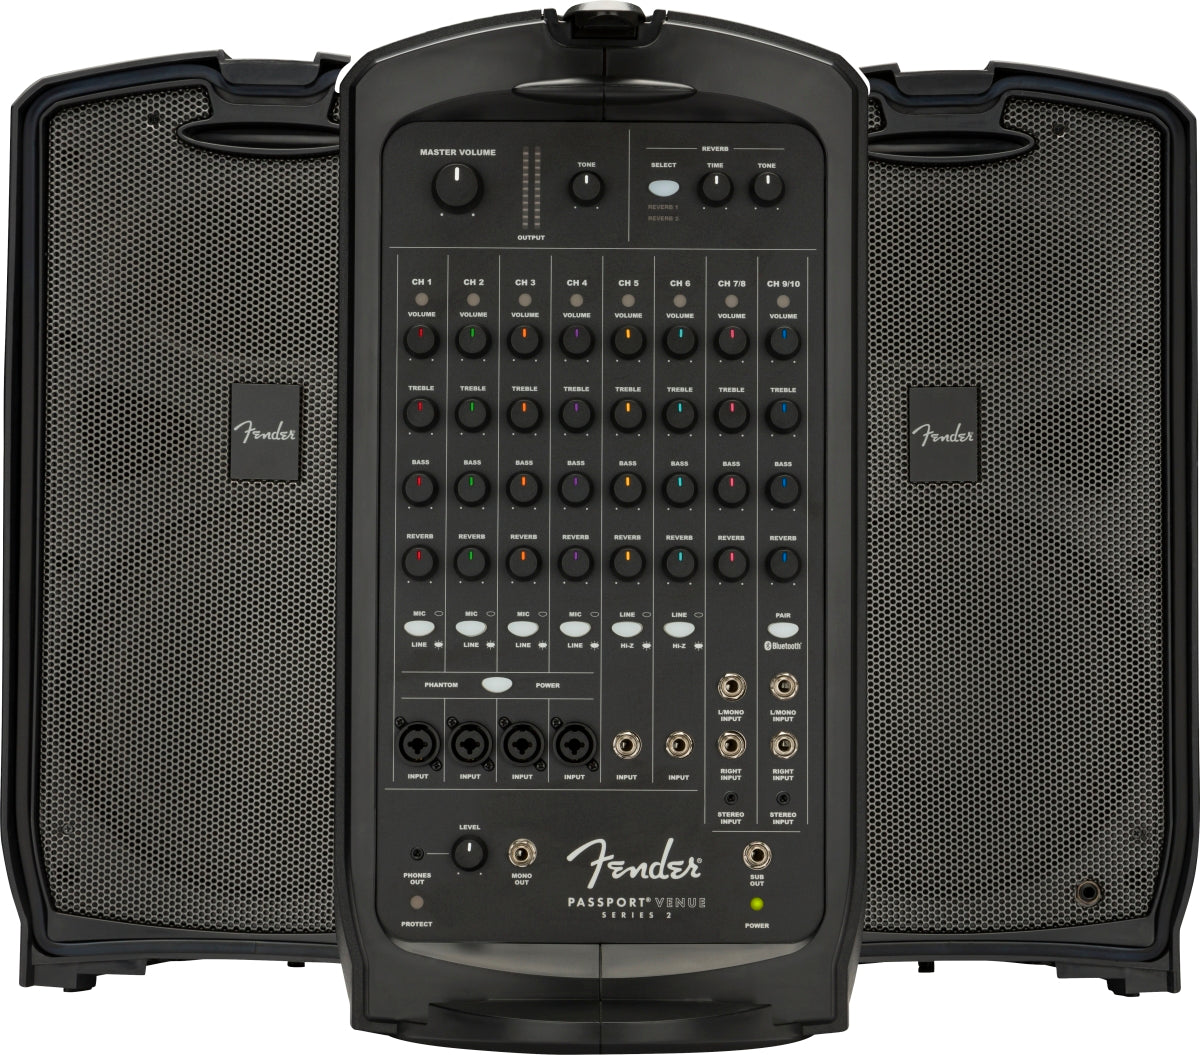 Fender Passport® Venue Series 2 Portable Audio System